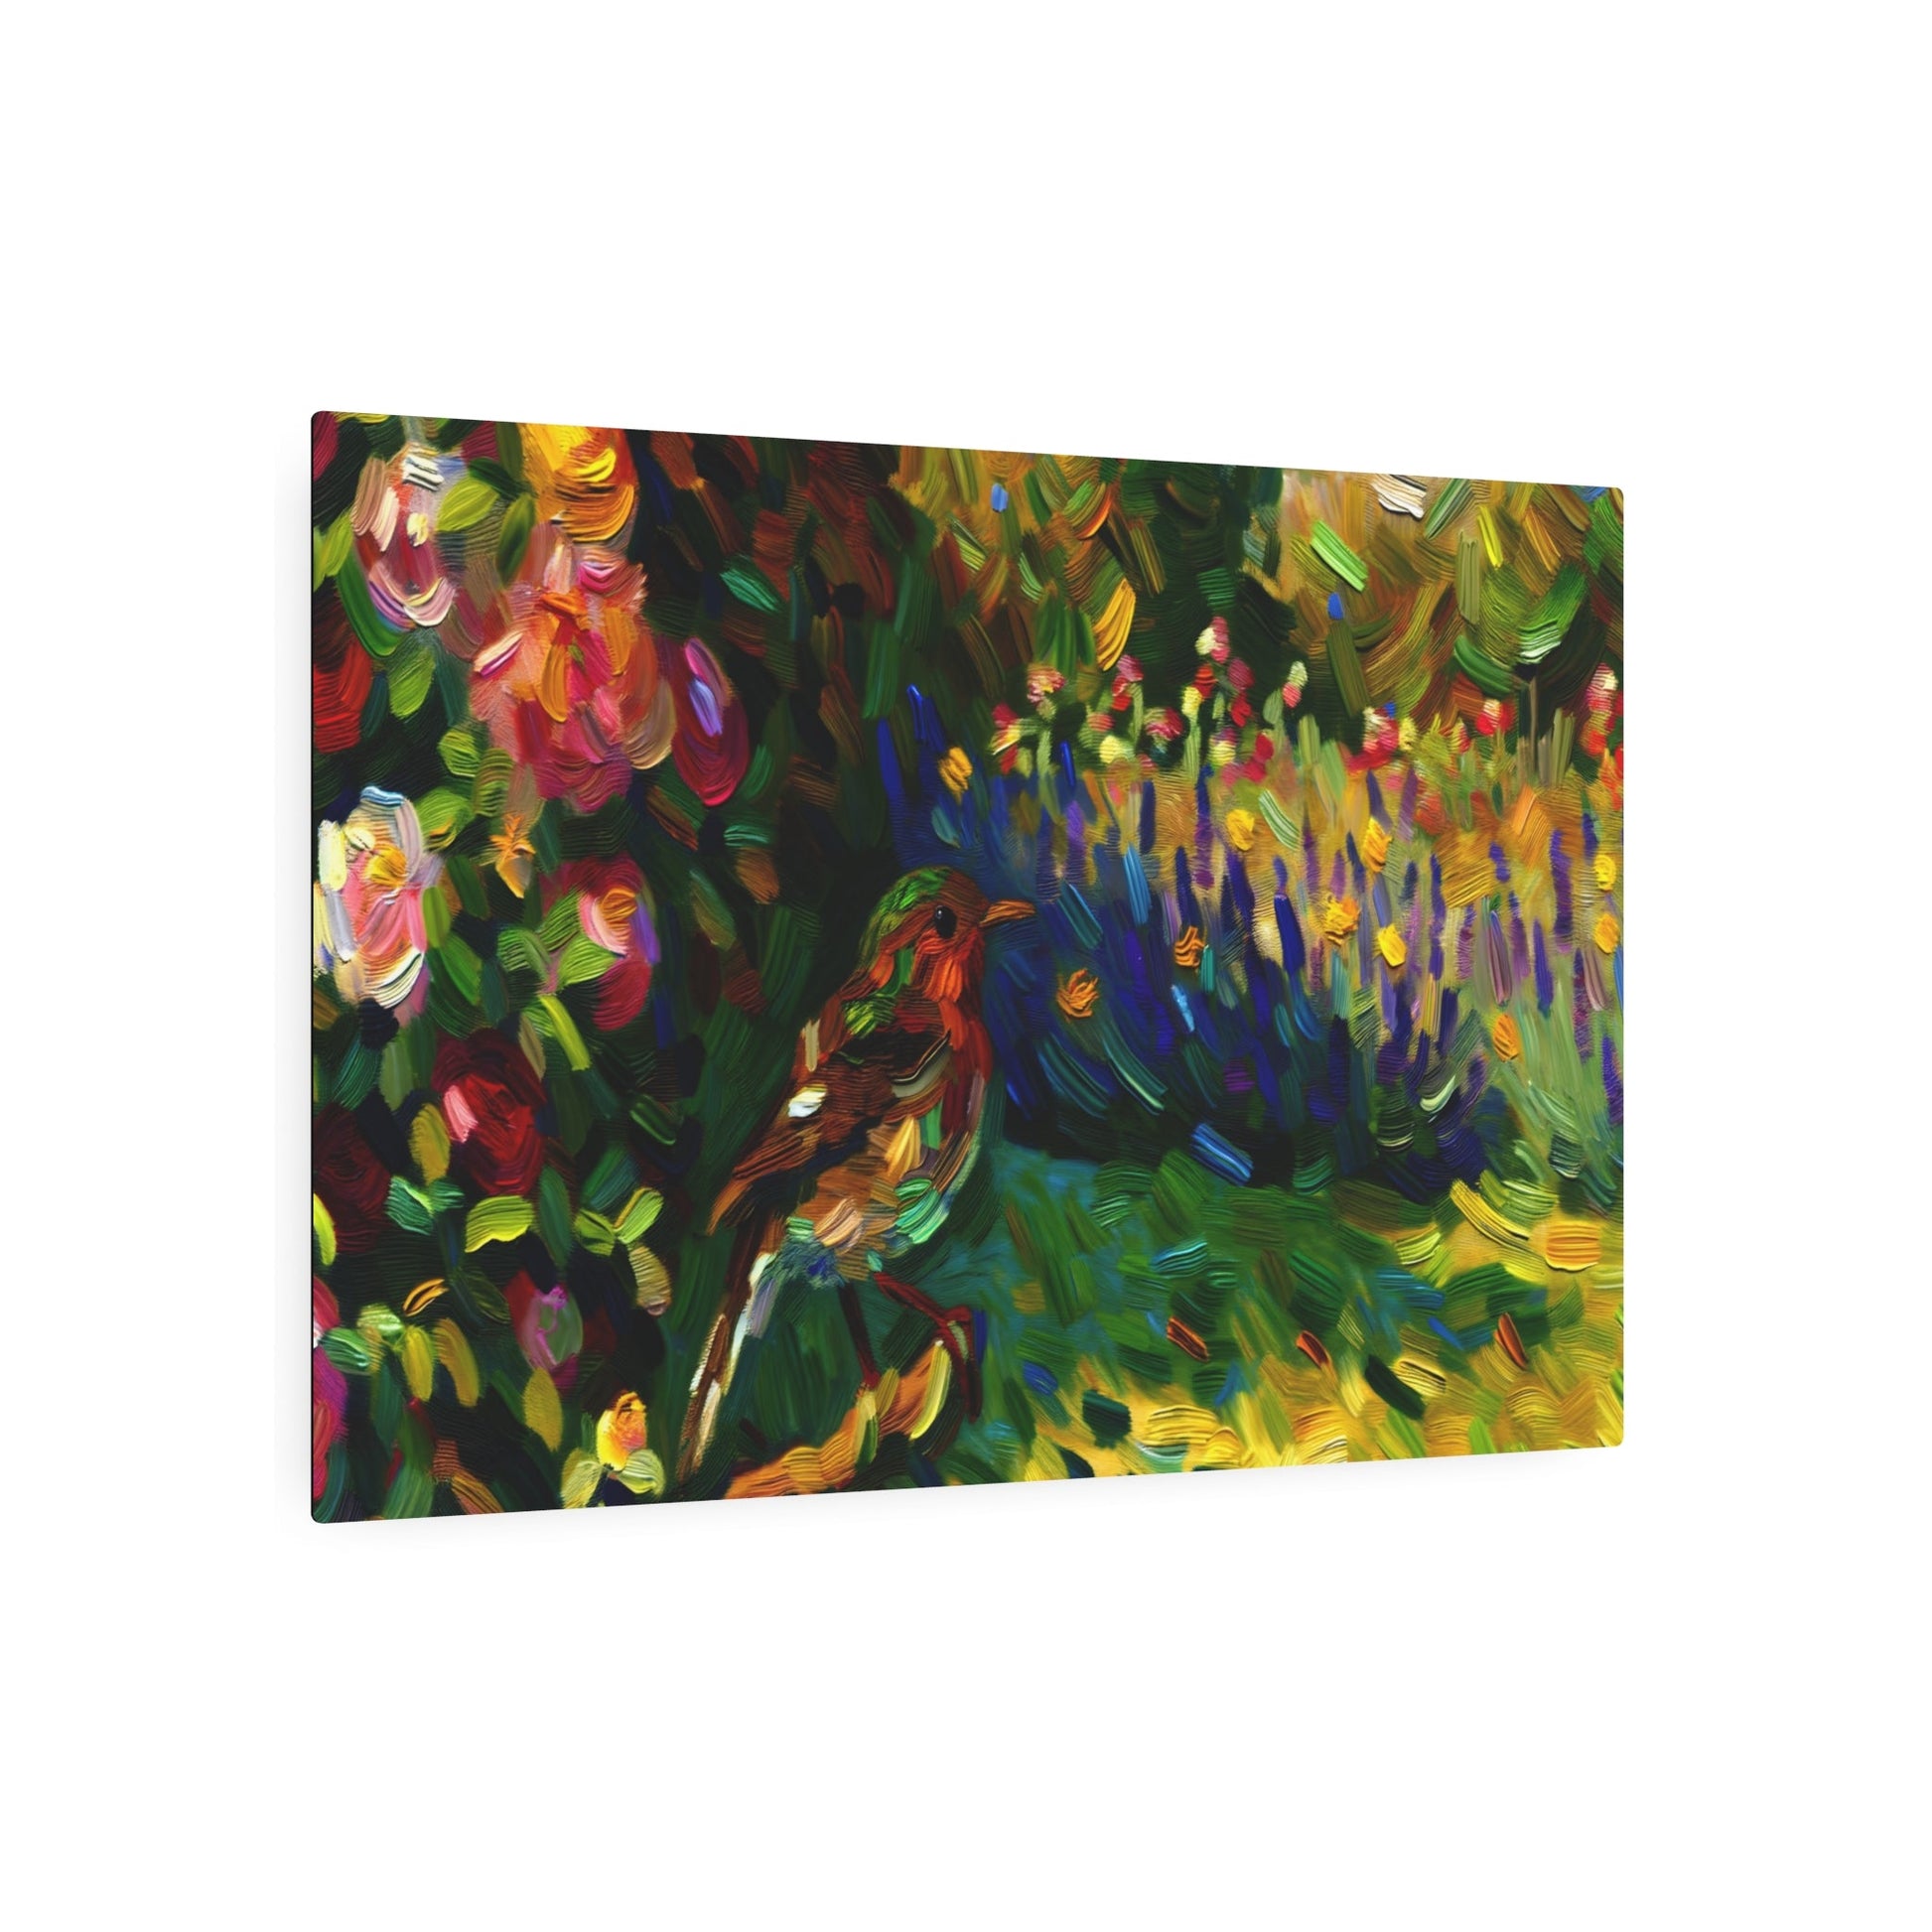 Metal Poster Art | "Impressionist Western Art Style - Vibrant Sunlit Garden with Bird amongst Flowers" - Metal Poster Art 36″ x 24″ (Horizontal) 0.12''